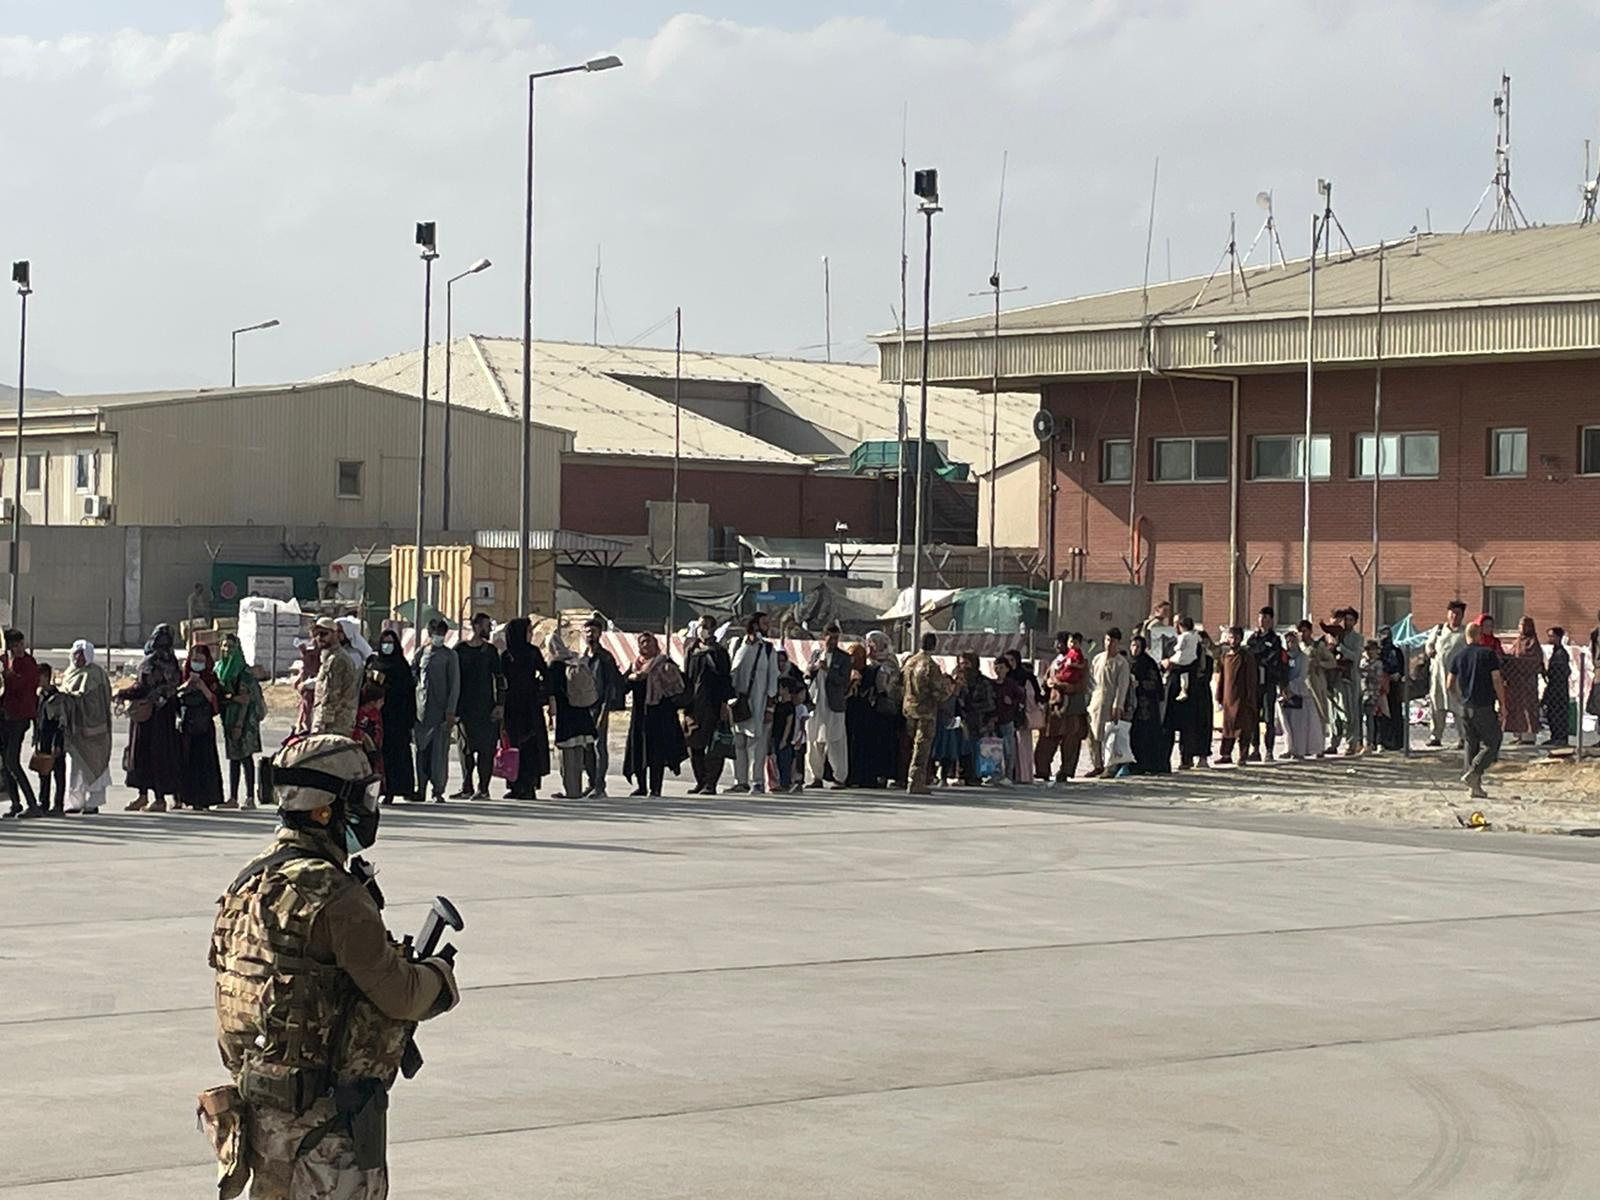 Italian plane evacuates people from Kabul airport